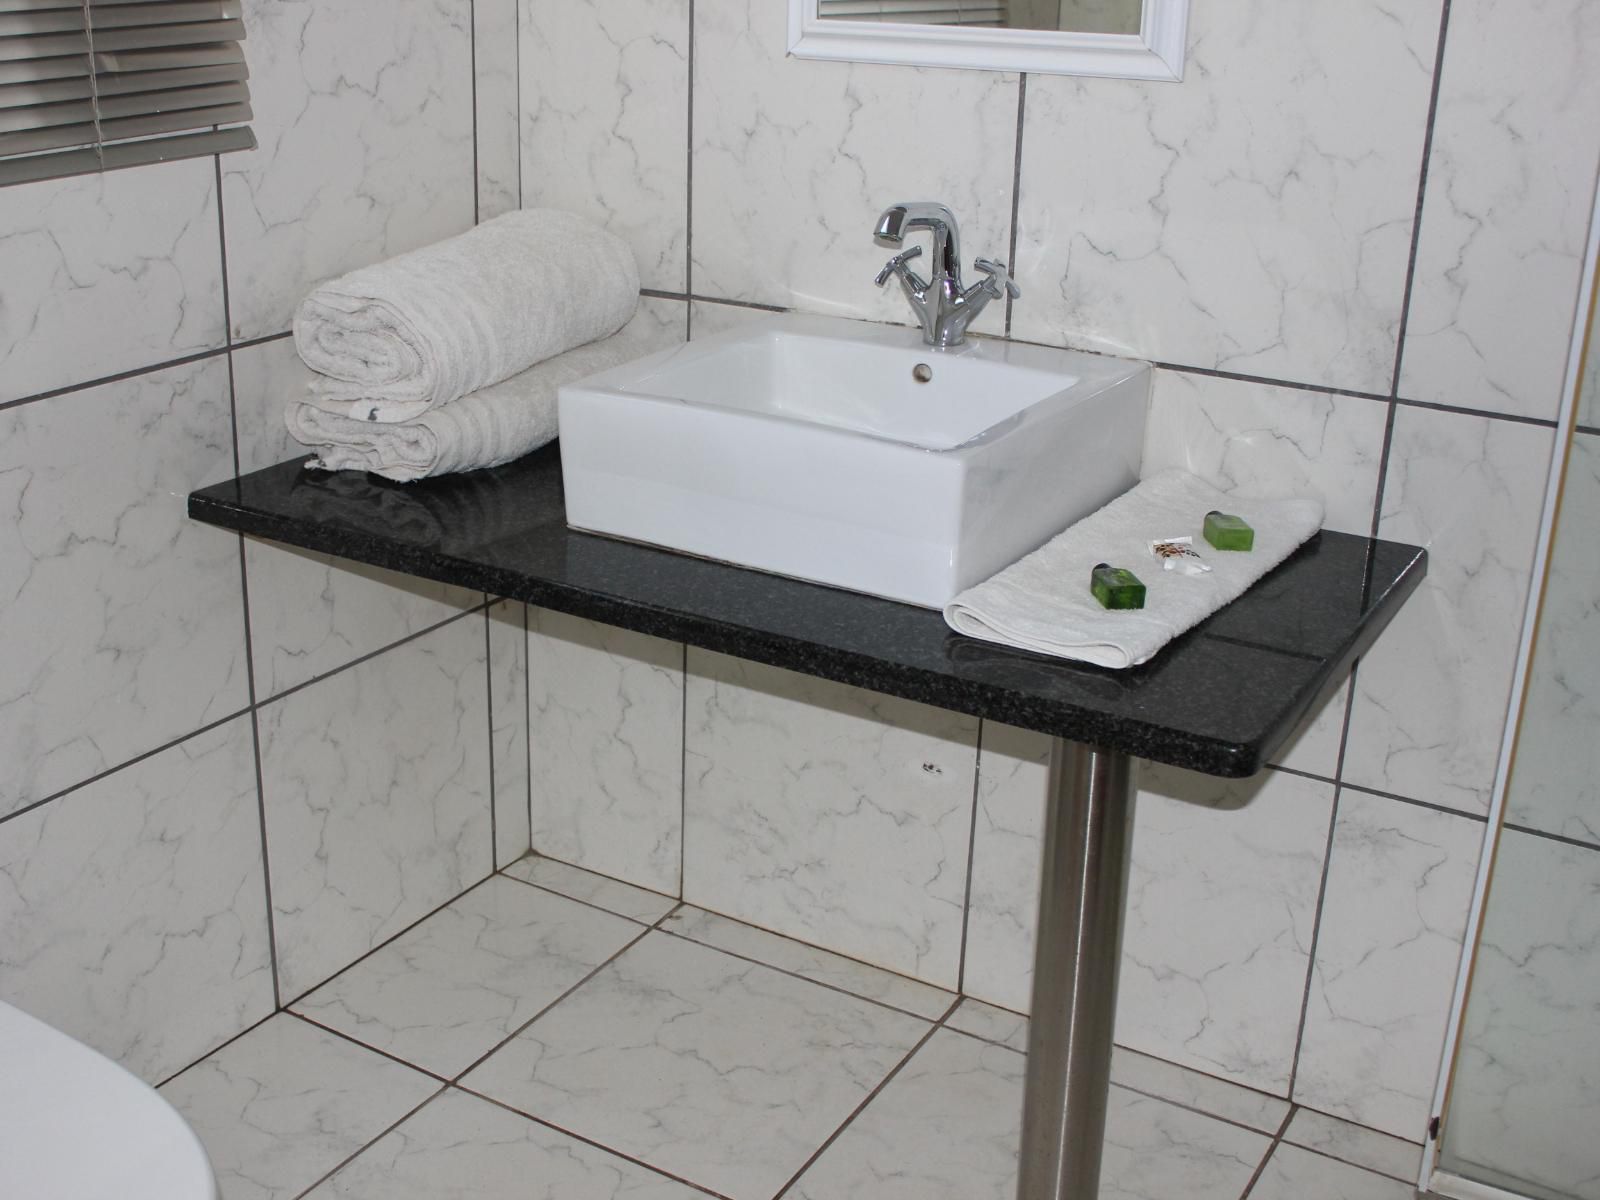 El Palmar Guest House Groblersdal Mpumalanga South Africa Colorless, Bathroom